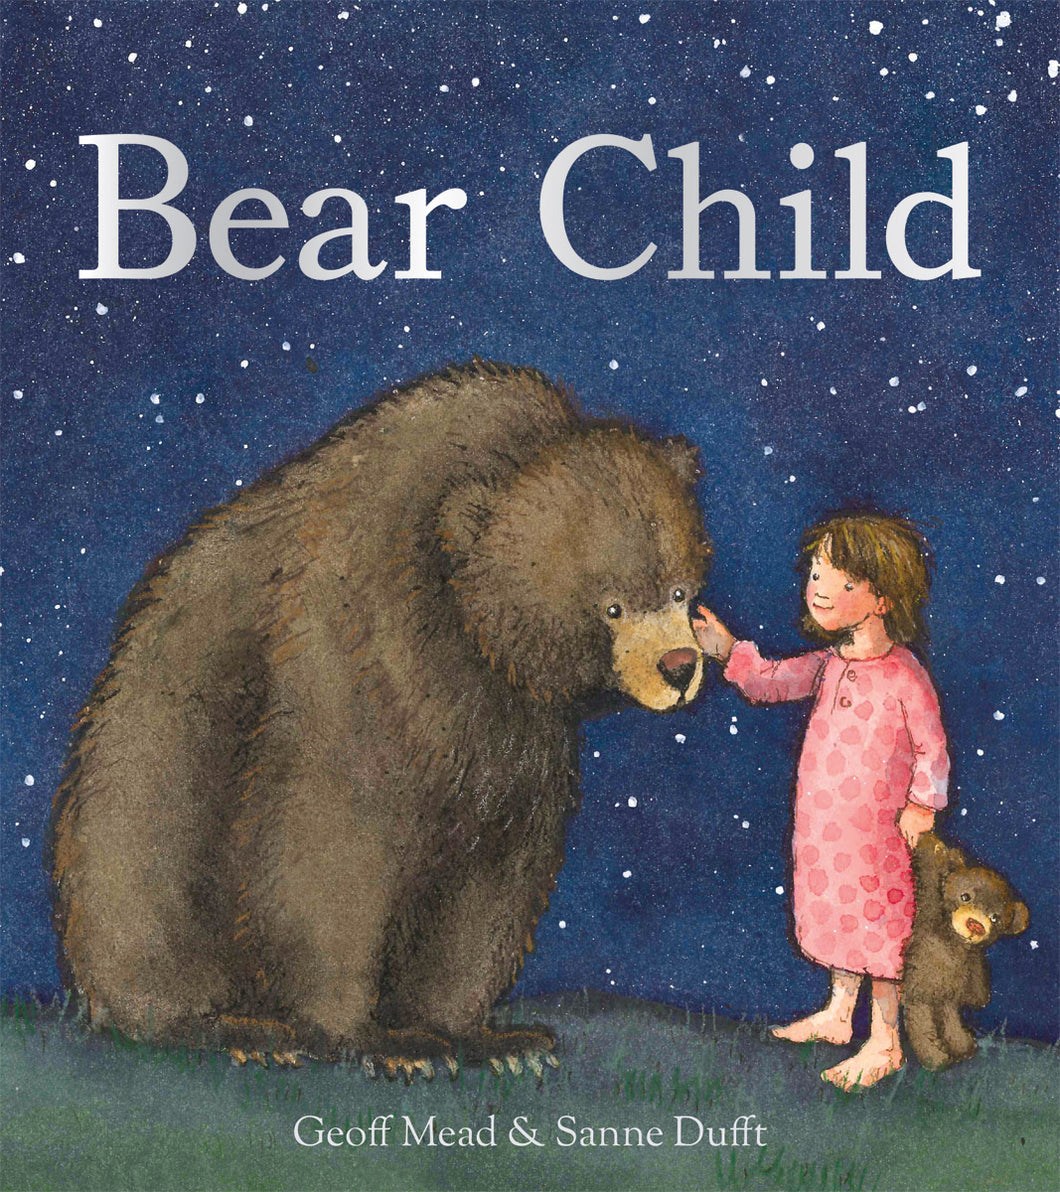 Bear Child by Geoff Mead